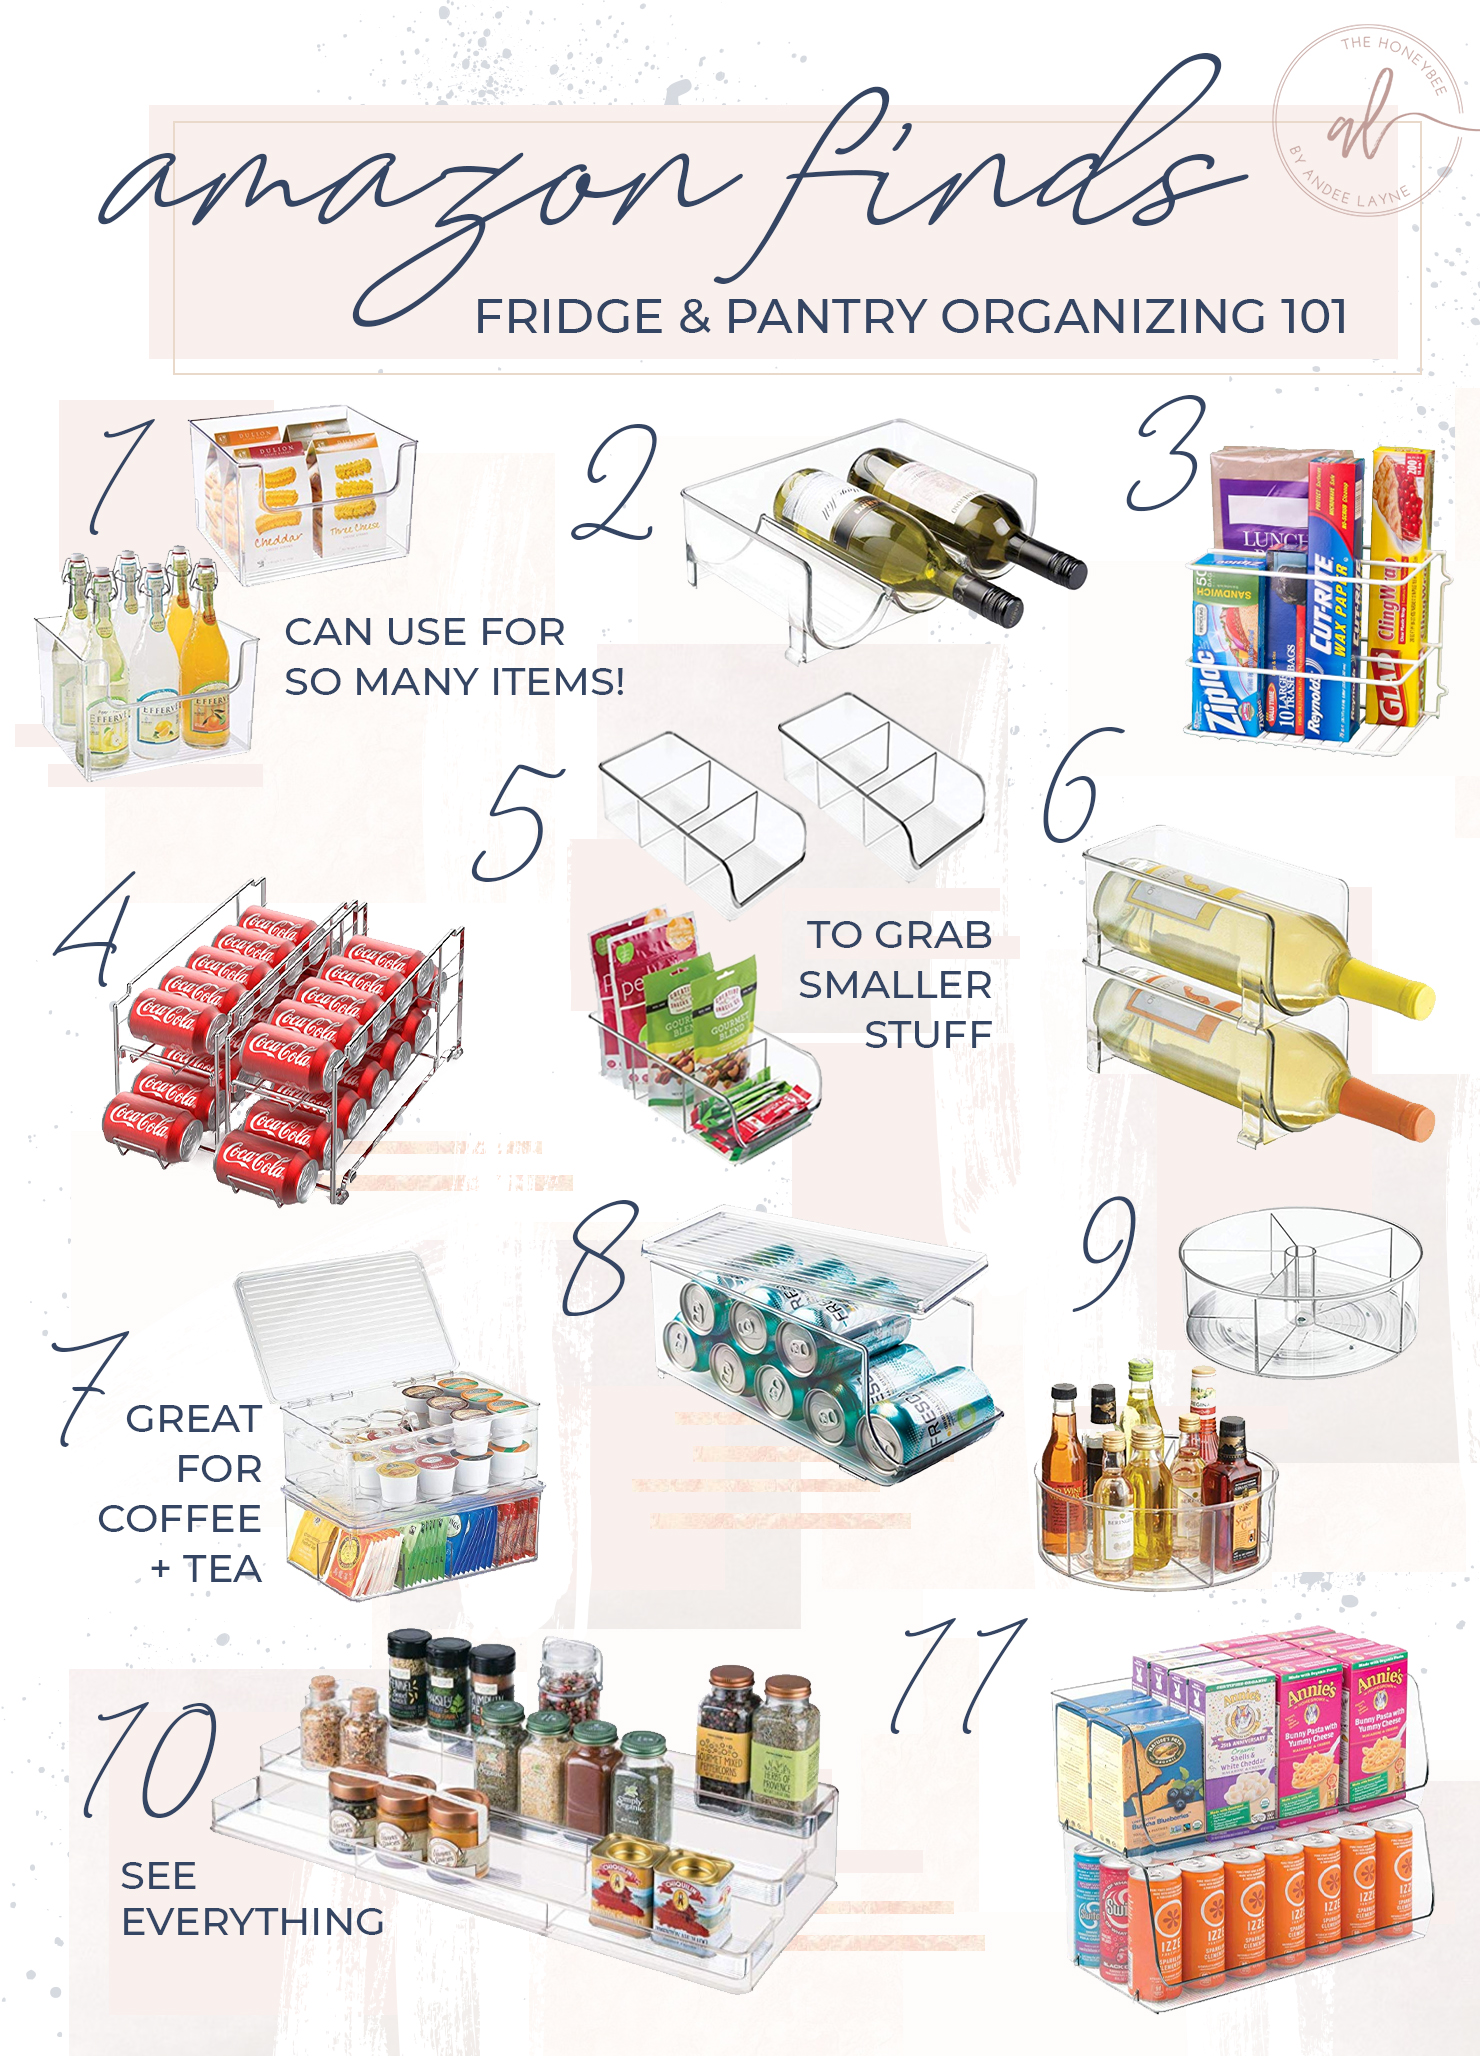 https://www.andeelayne.com/wp-content/uploads/2019/07/029-Amazon-finds-fridge-and-pantry-organizing-101.jpg